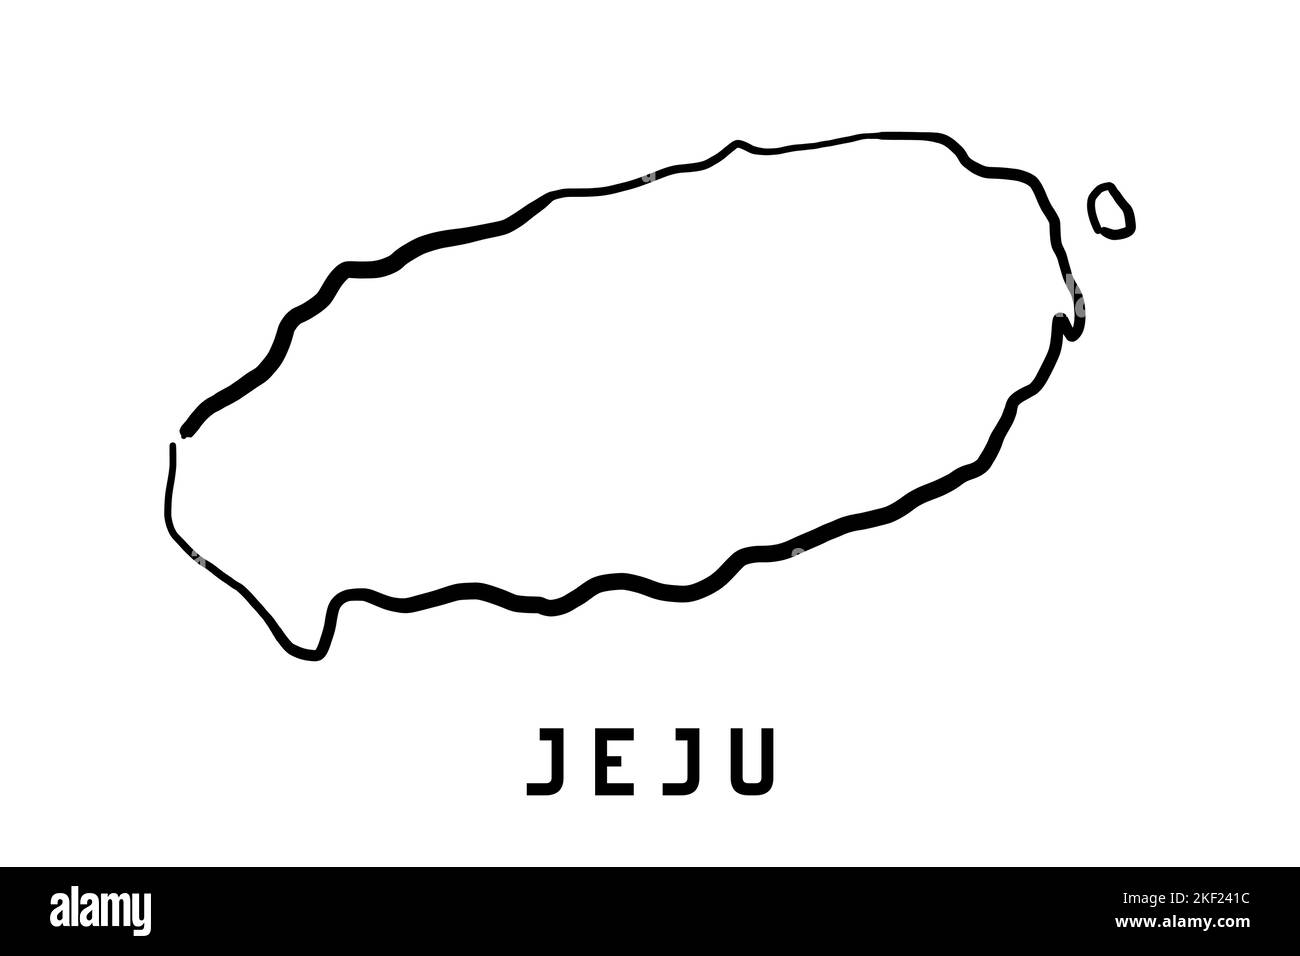 Carte de l'île de Jeju simple contour. Carte de style simplifiée vectorisée à la main. Jeju, Corée du Sud. Illustration de Vecteur